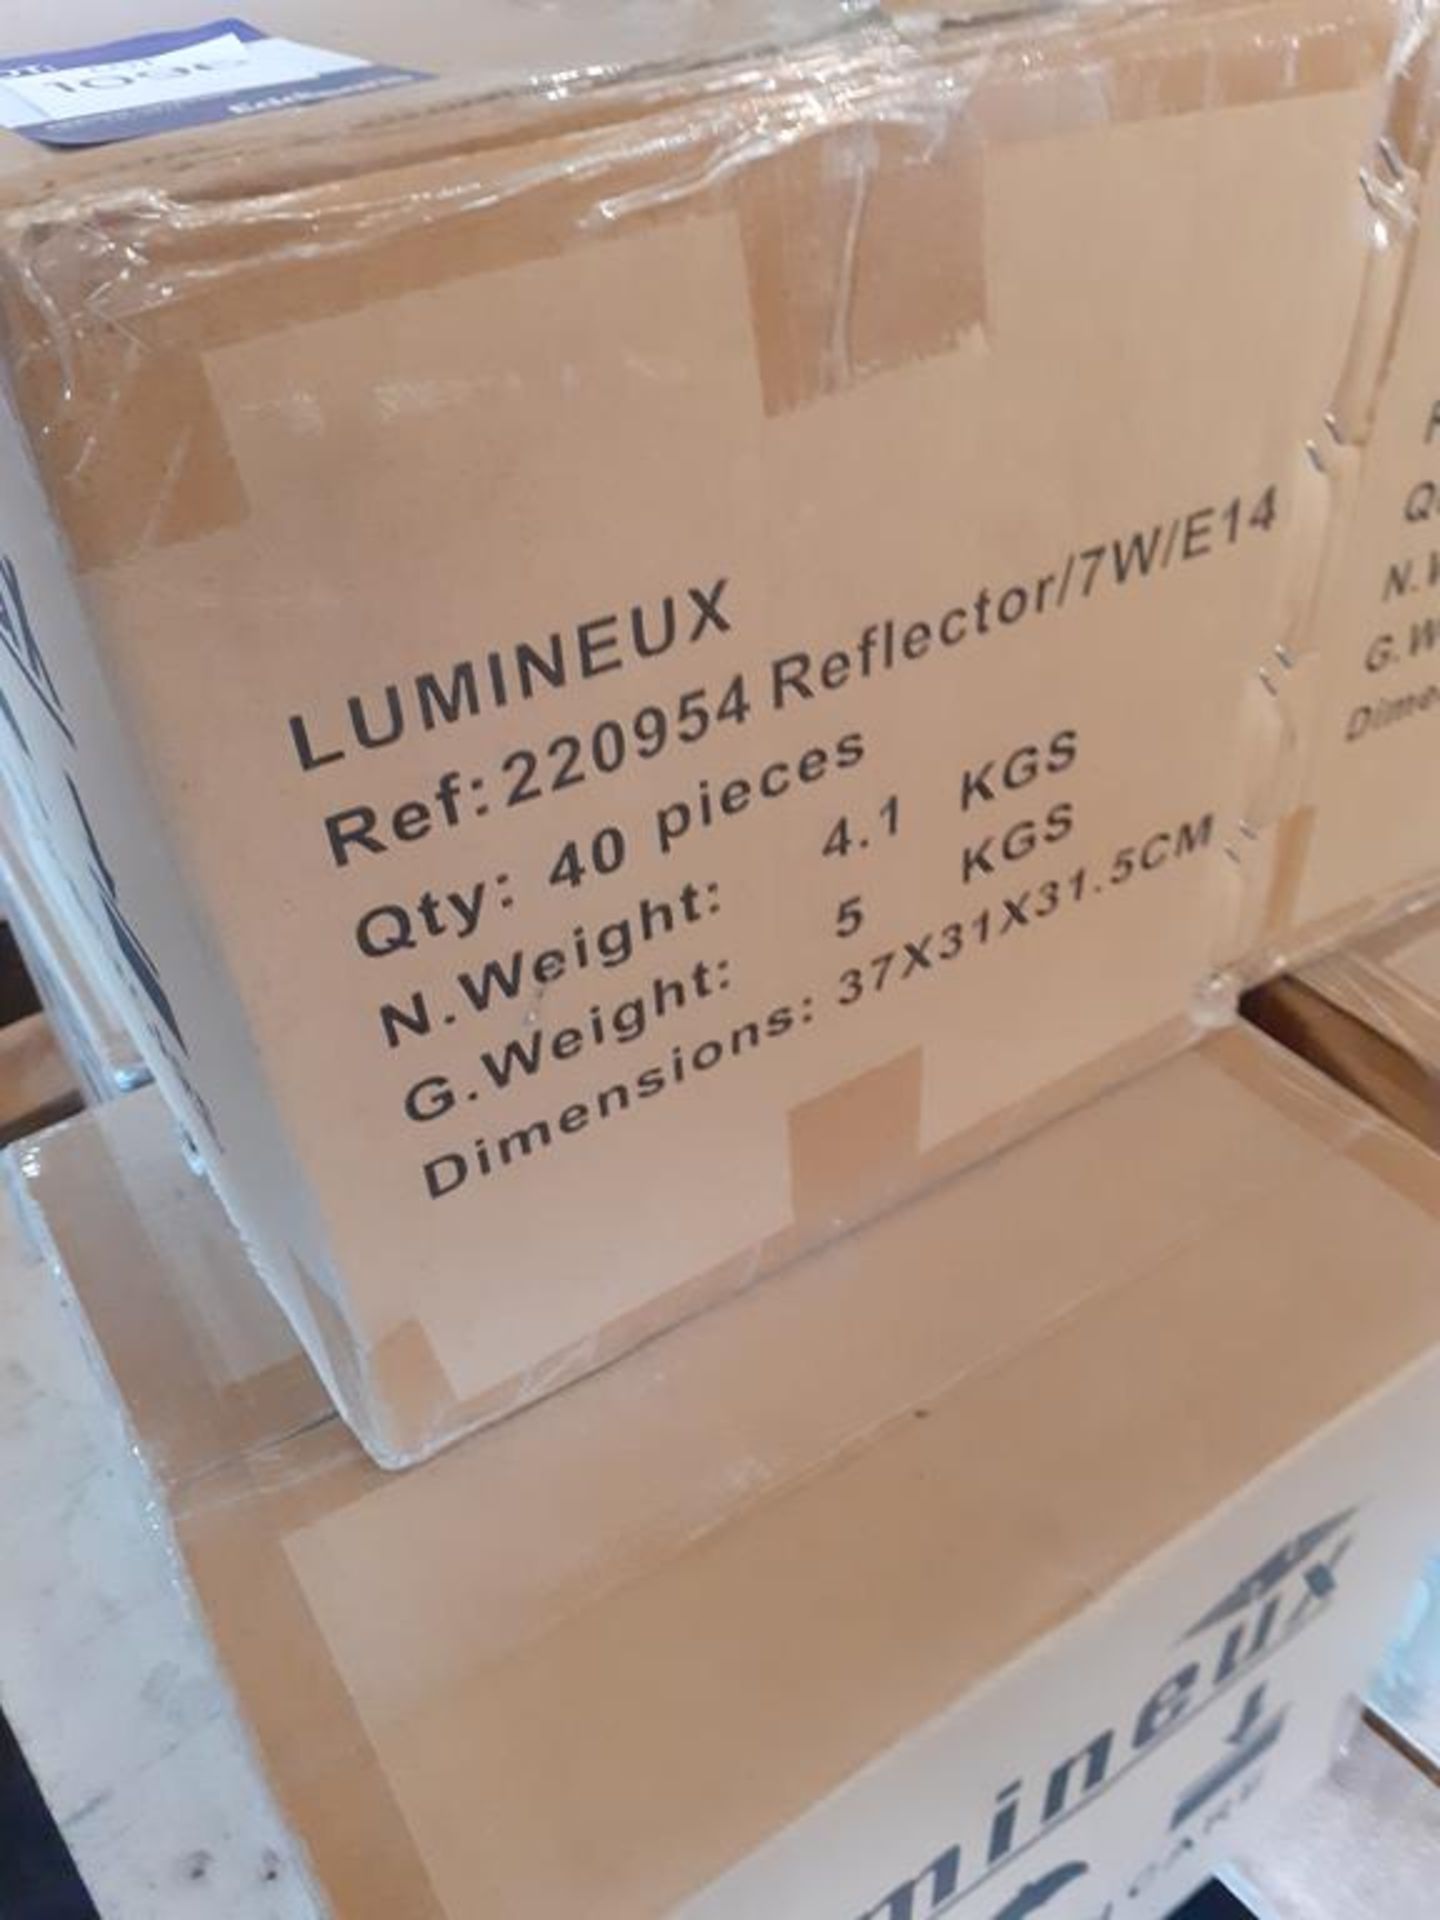 6x boxes of Lumineux Reflector 7W E14 2700K 220-240V Energy Saving Light Bulbs (40pcs per box) - Image 2 of 4